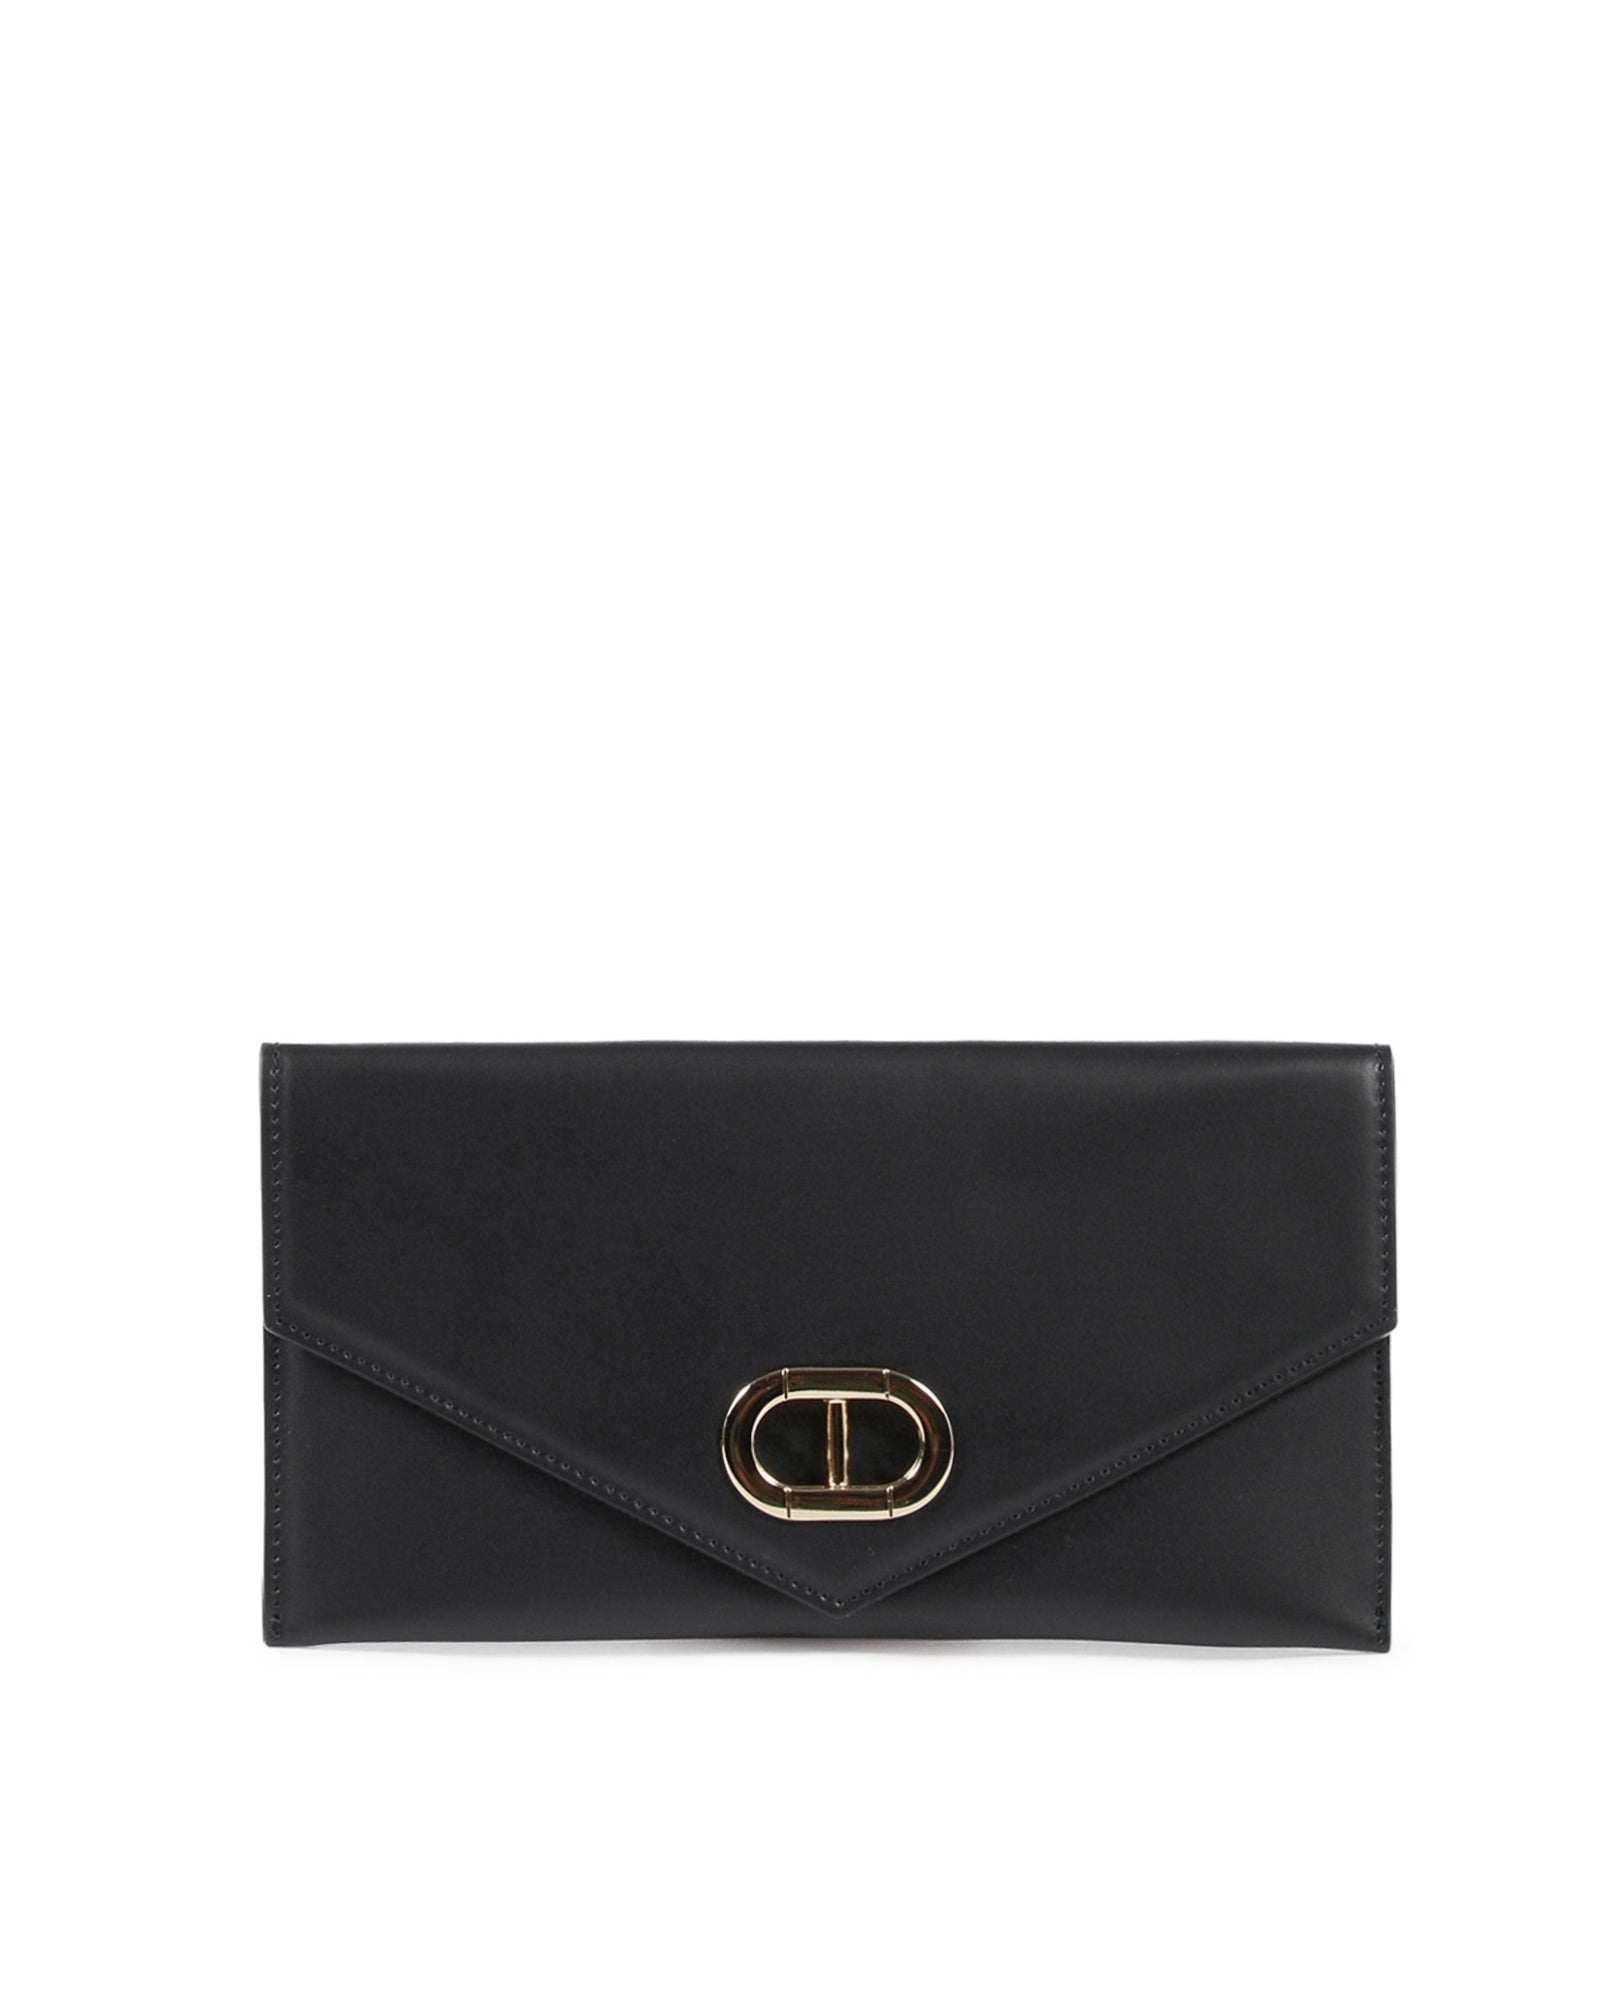 Leather Envelope Clutch Black